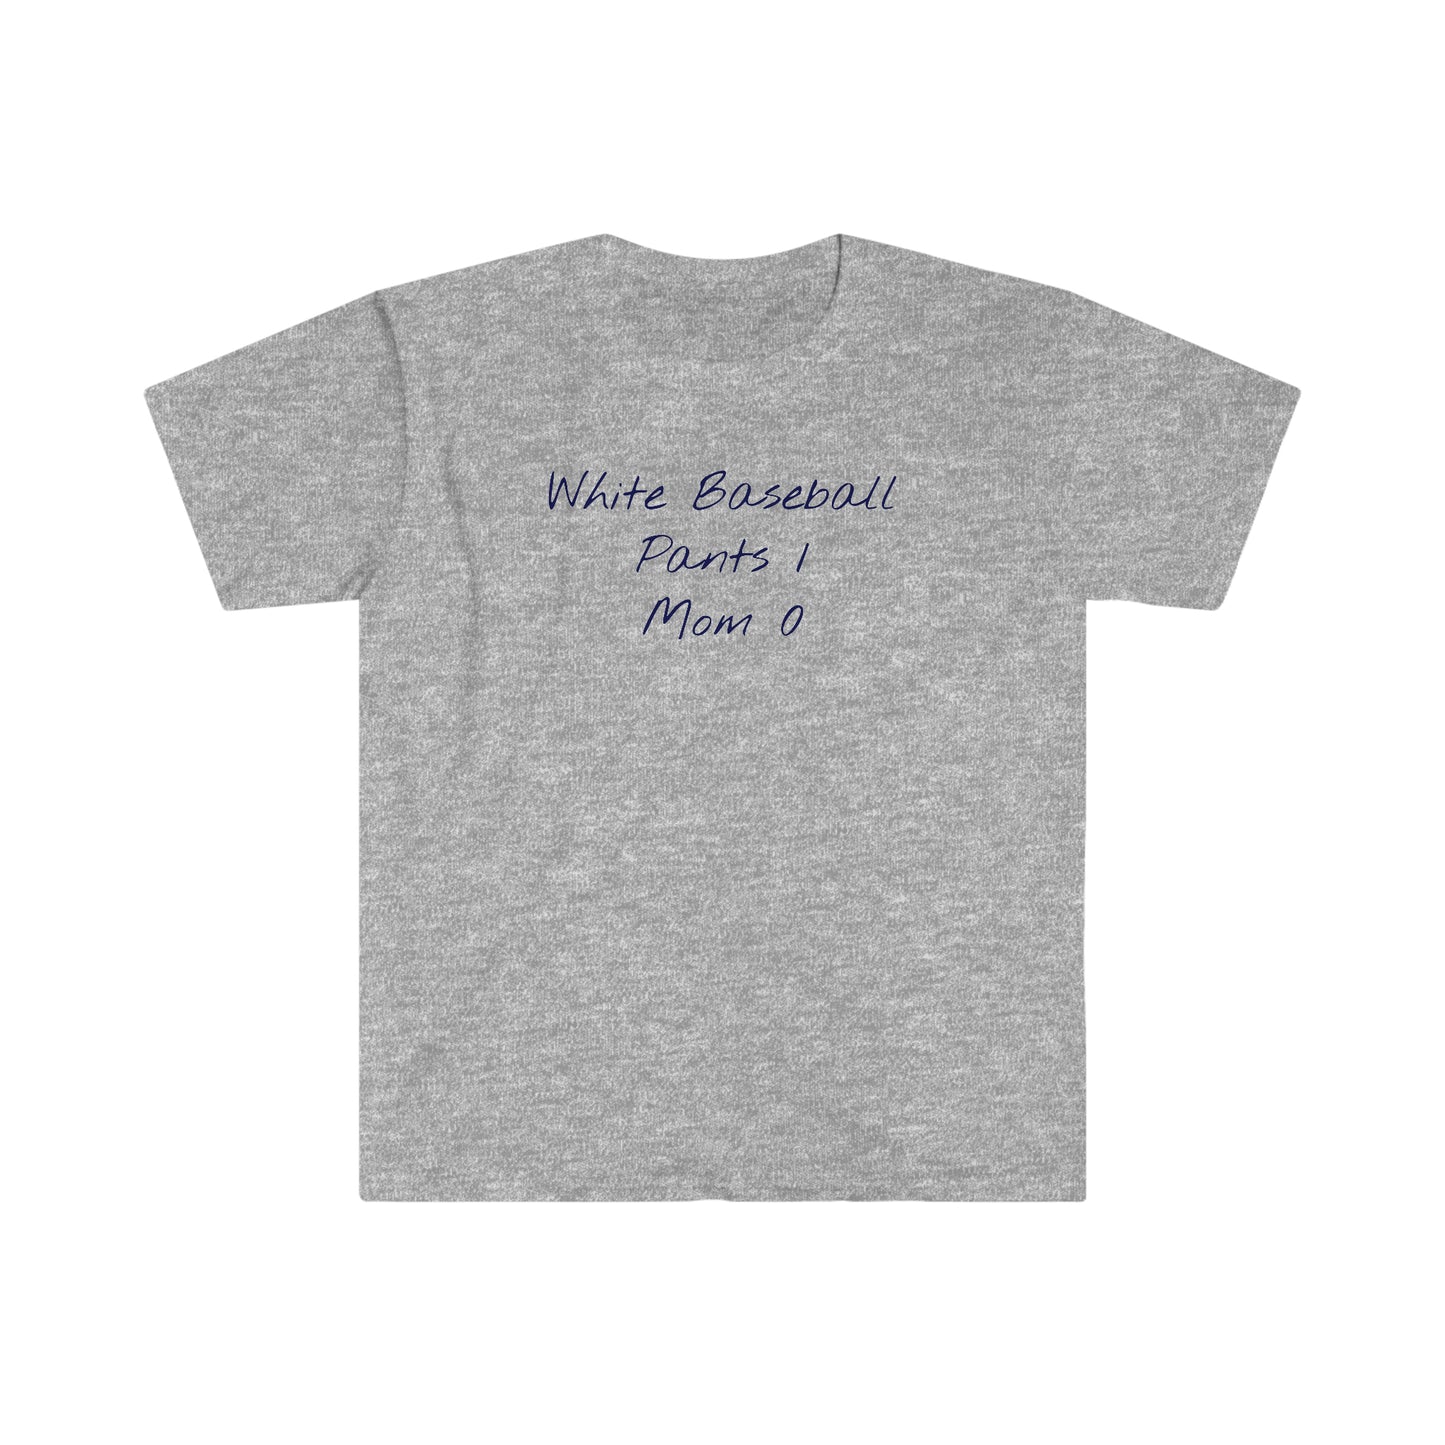 White Baseball Pants 1 Mom 0 Softstyle T-Shirt